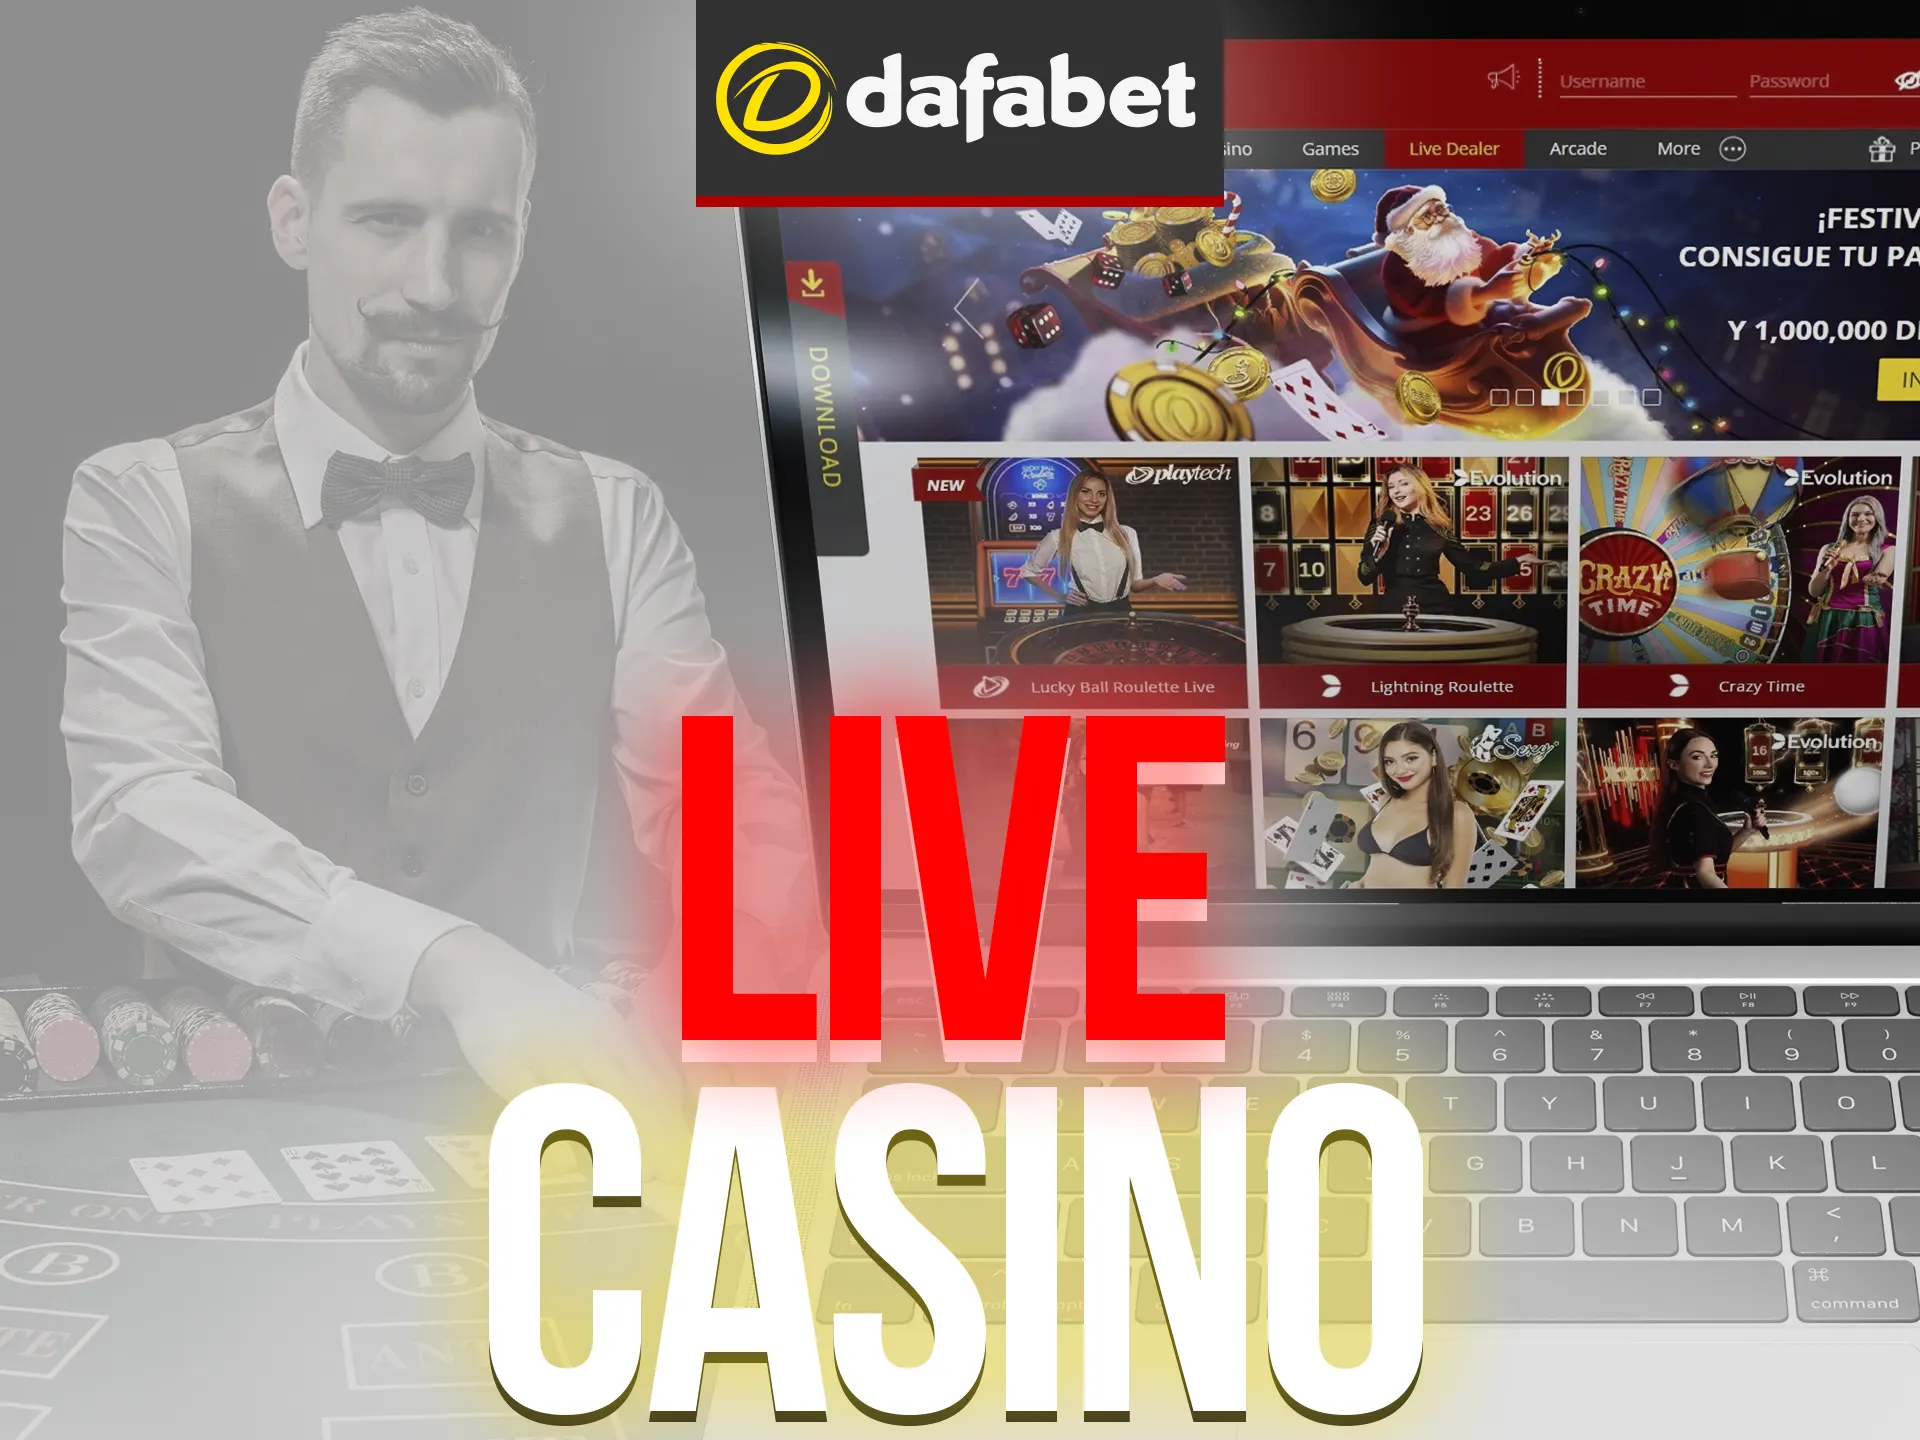 Bet on live dealer games like Baccarat, Roulette, Sic bo, Poker, Blackjack.